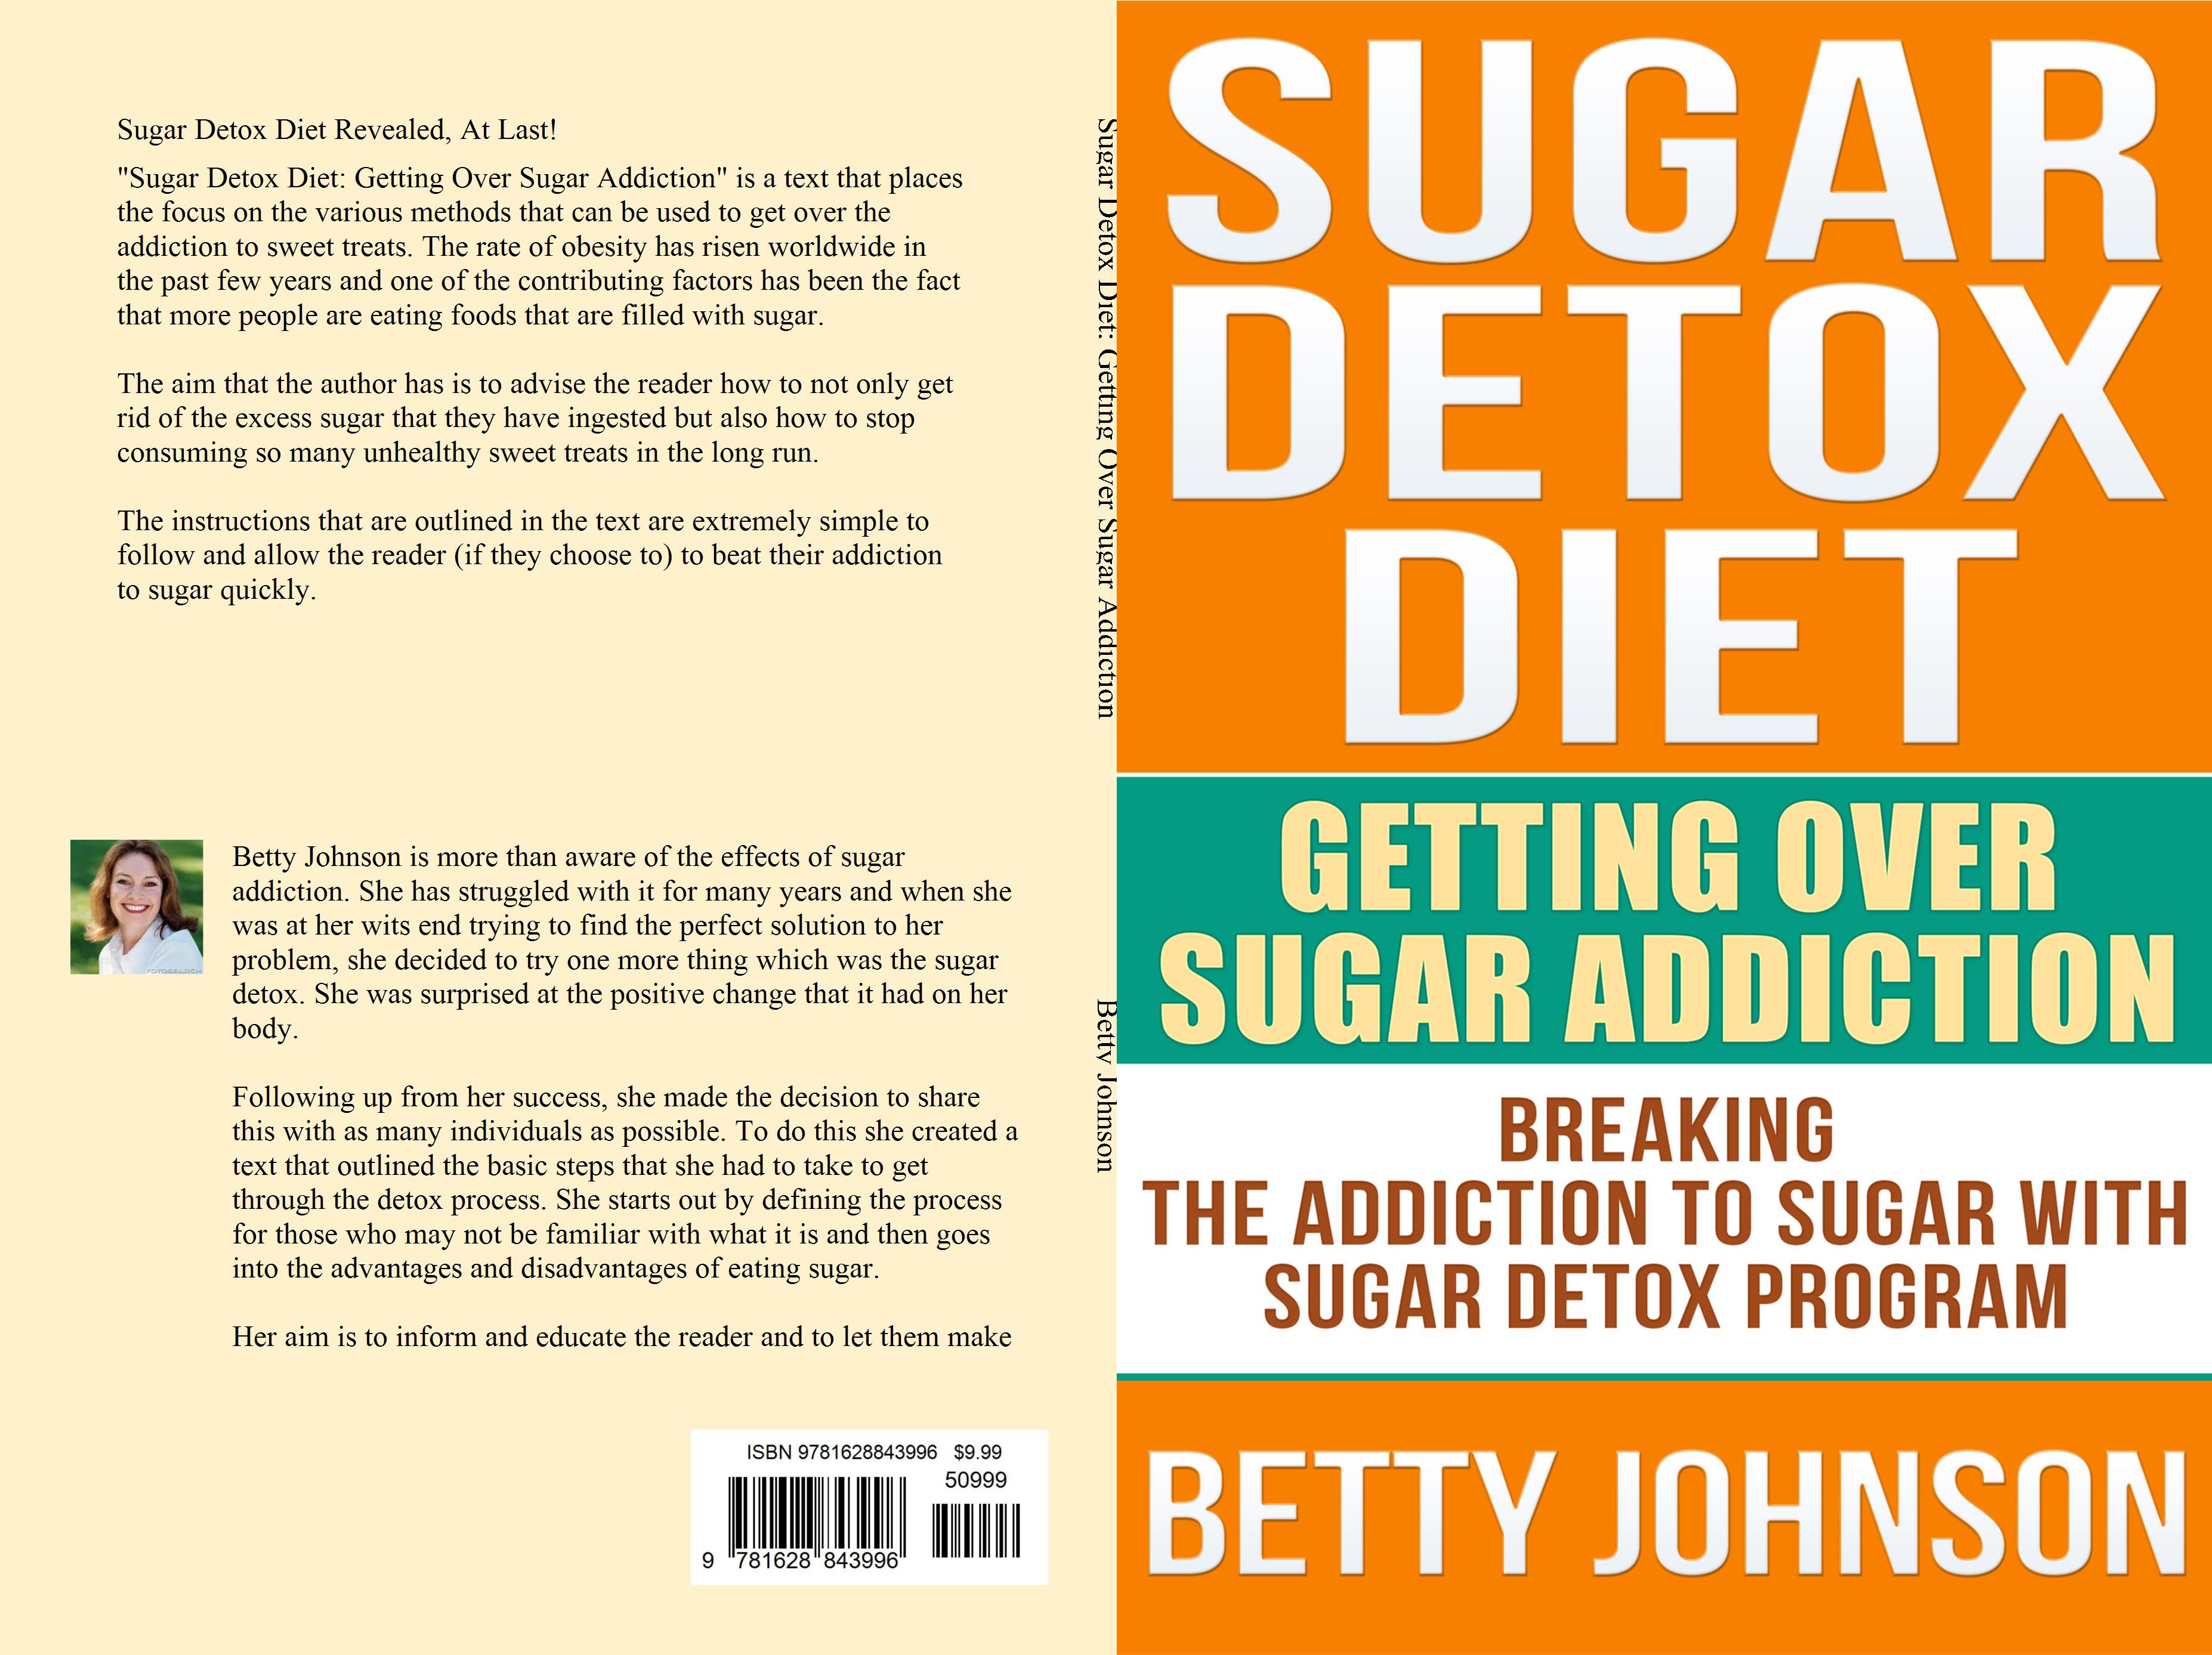 Sugar Detox Diet: Getting Over Sugar Addiction by Betty Johnson ...